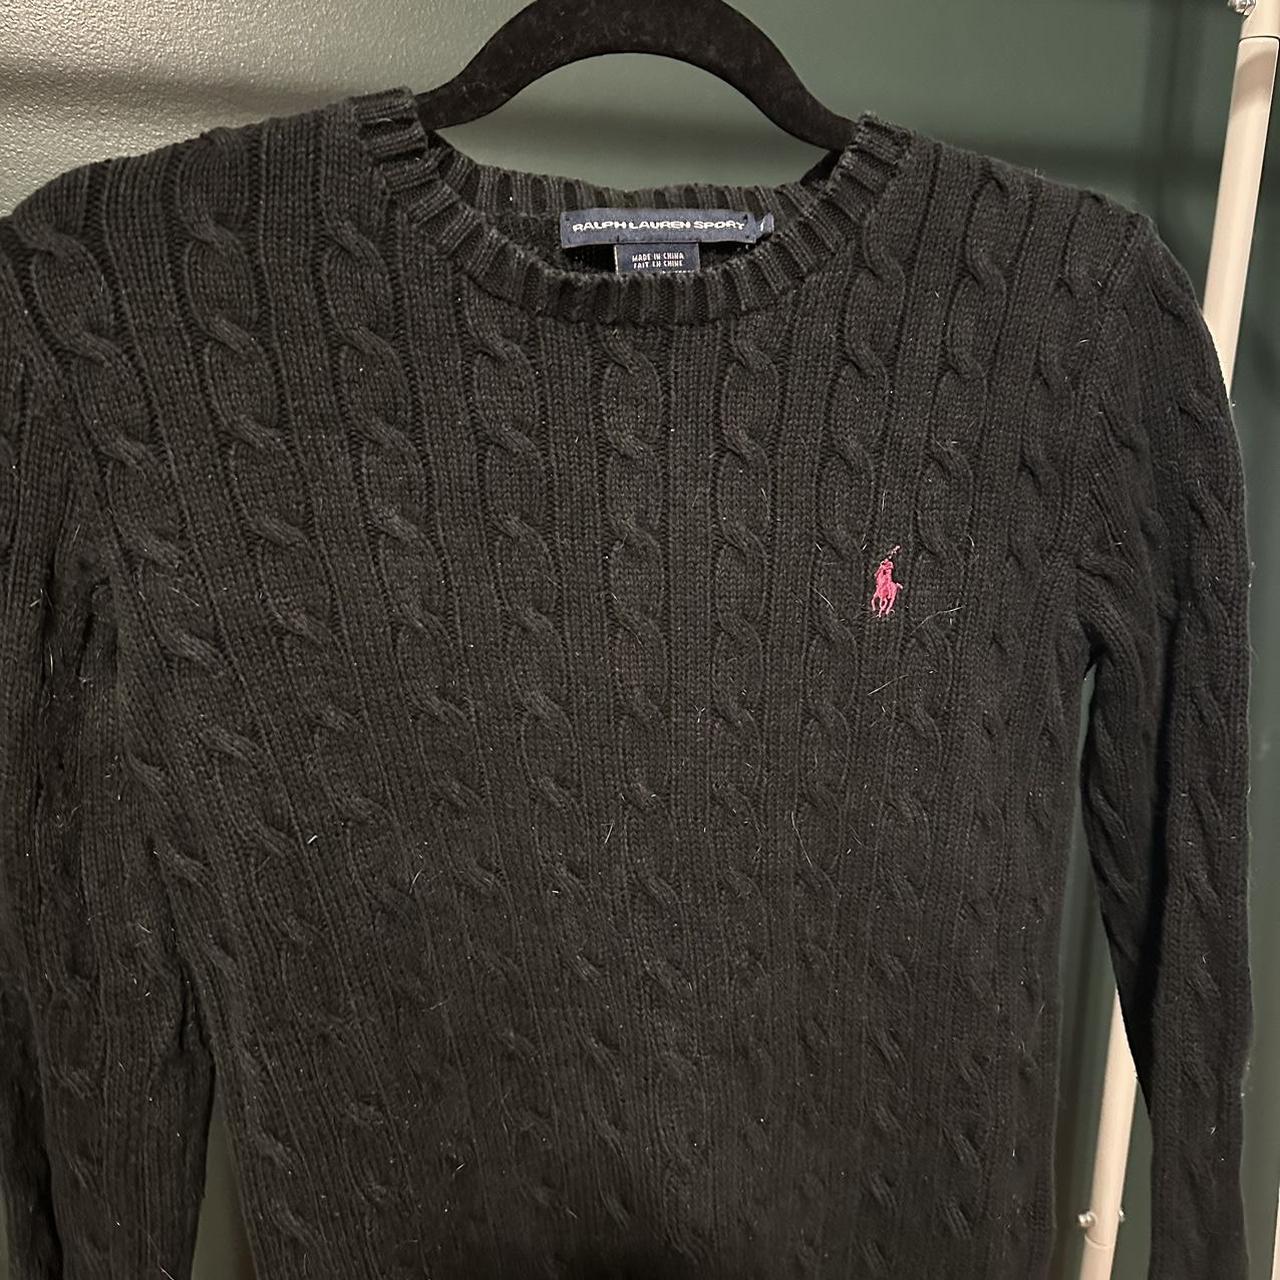 Black Ralph Lauren Sport 100% cotton sweater with... - Depop